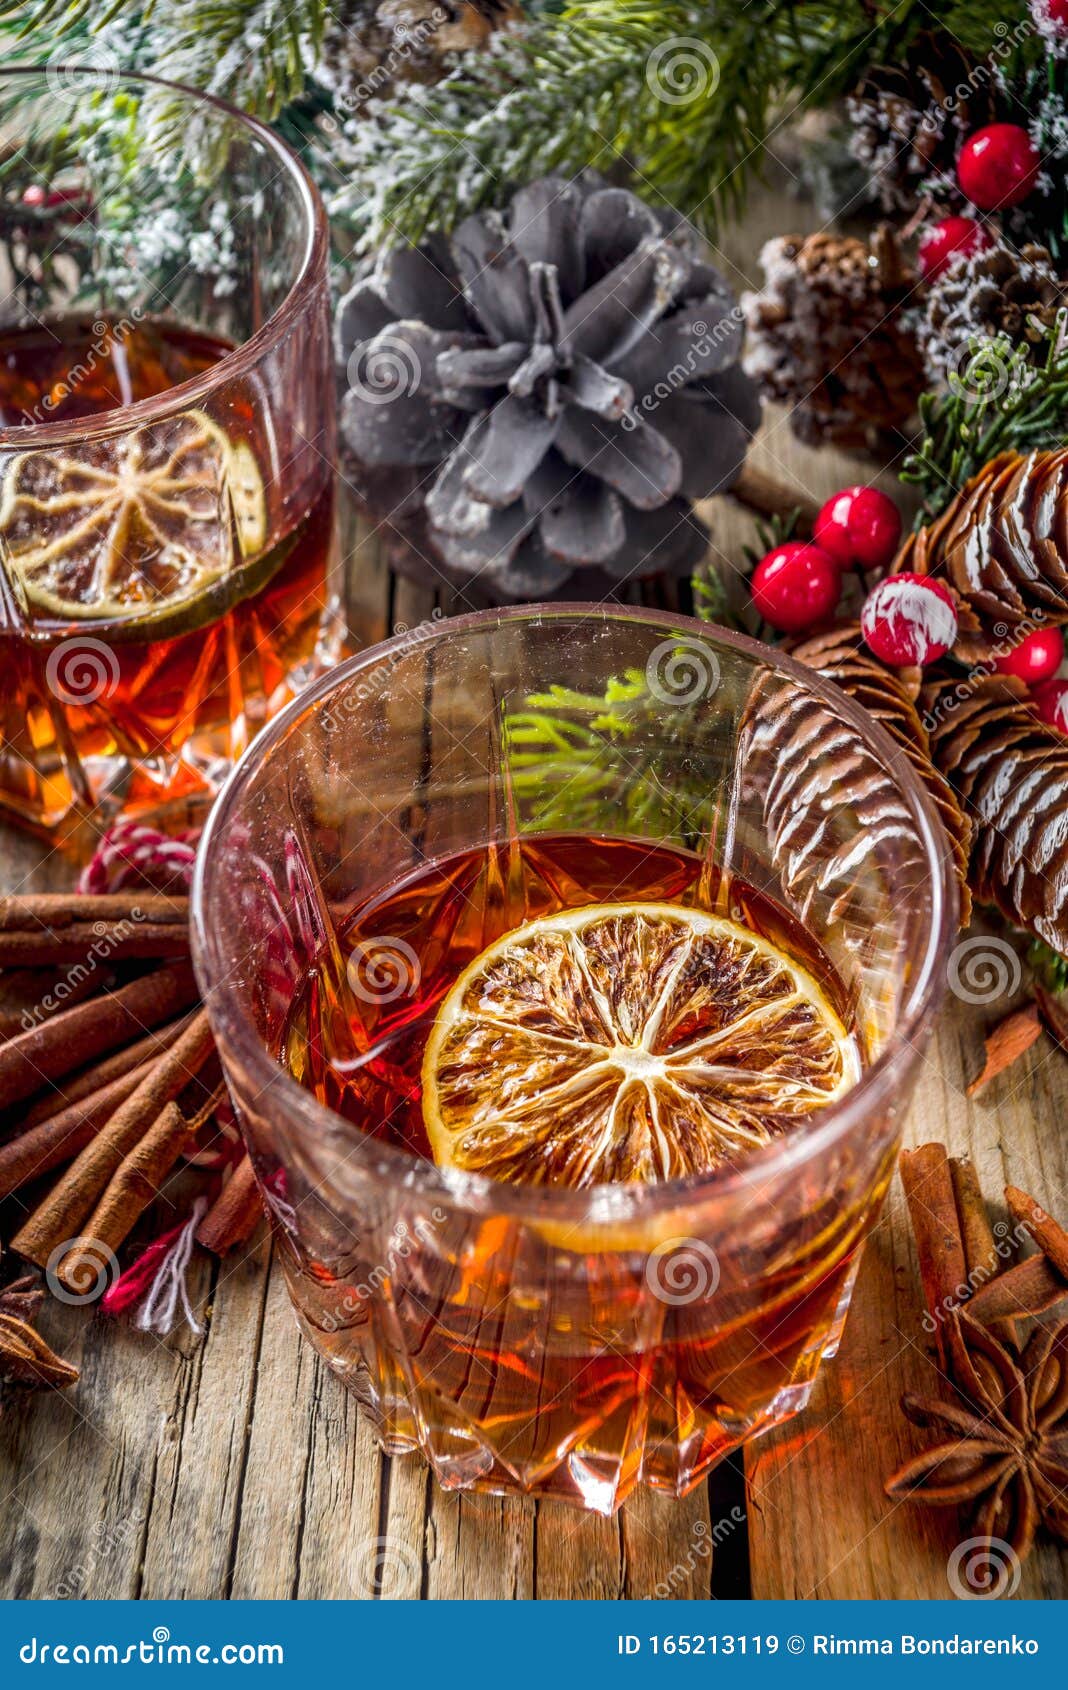 Orange Spice And Bourbon Whiskey Cocktail Stock Image Image Of Drunk Citrus 165213119